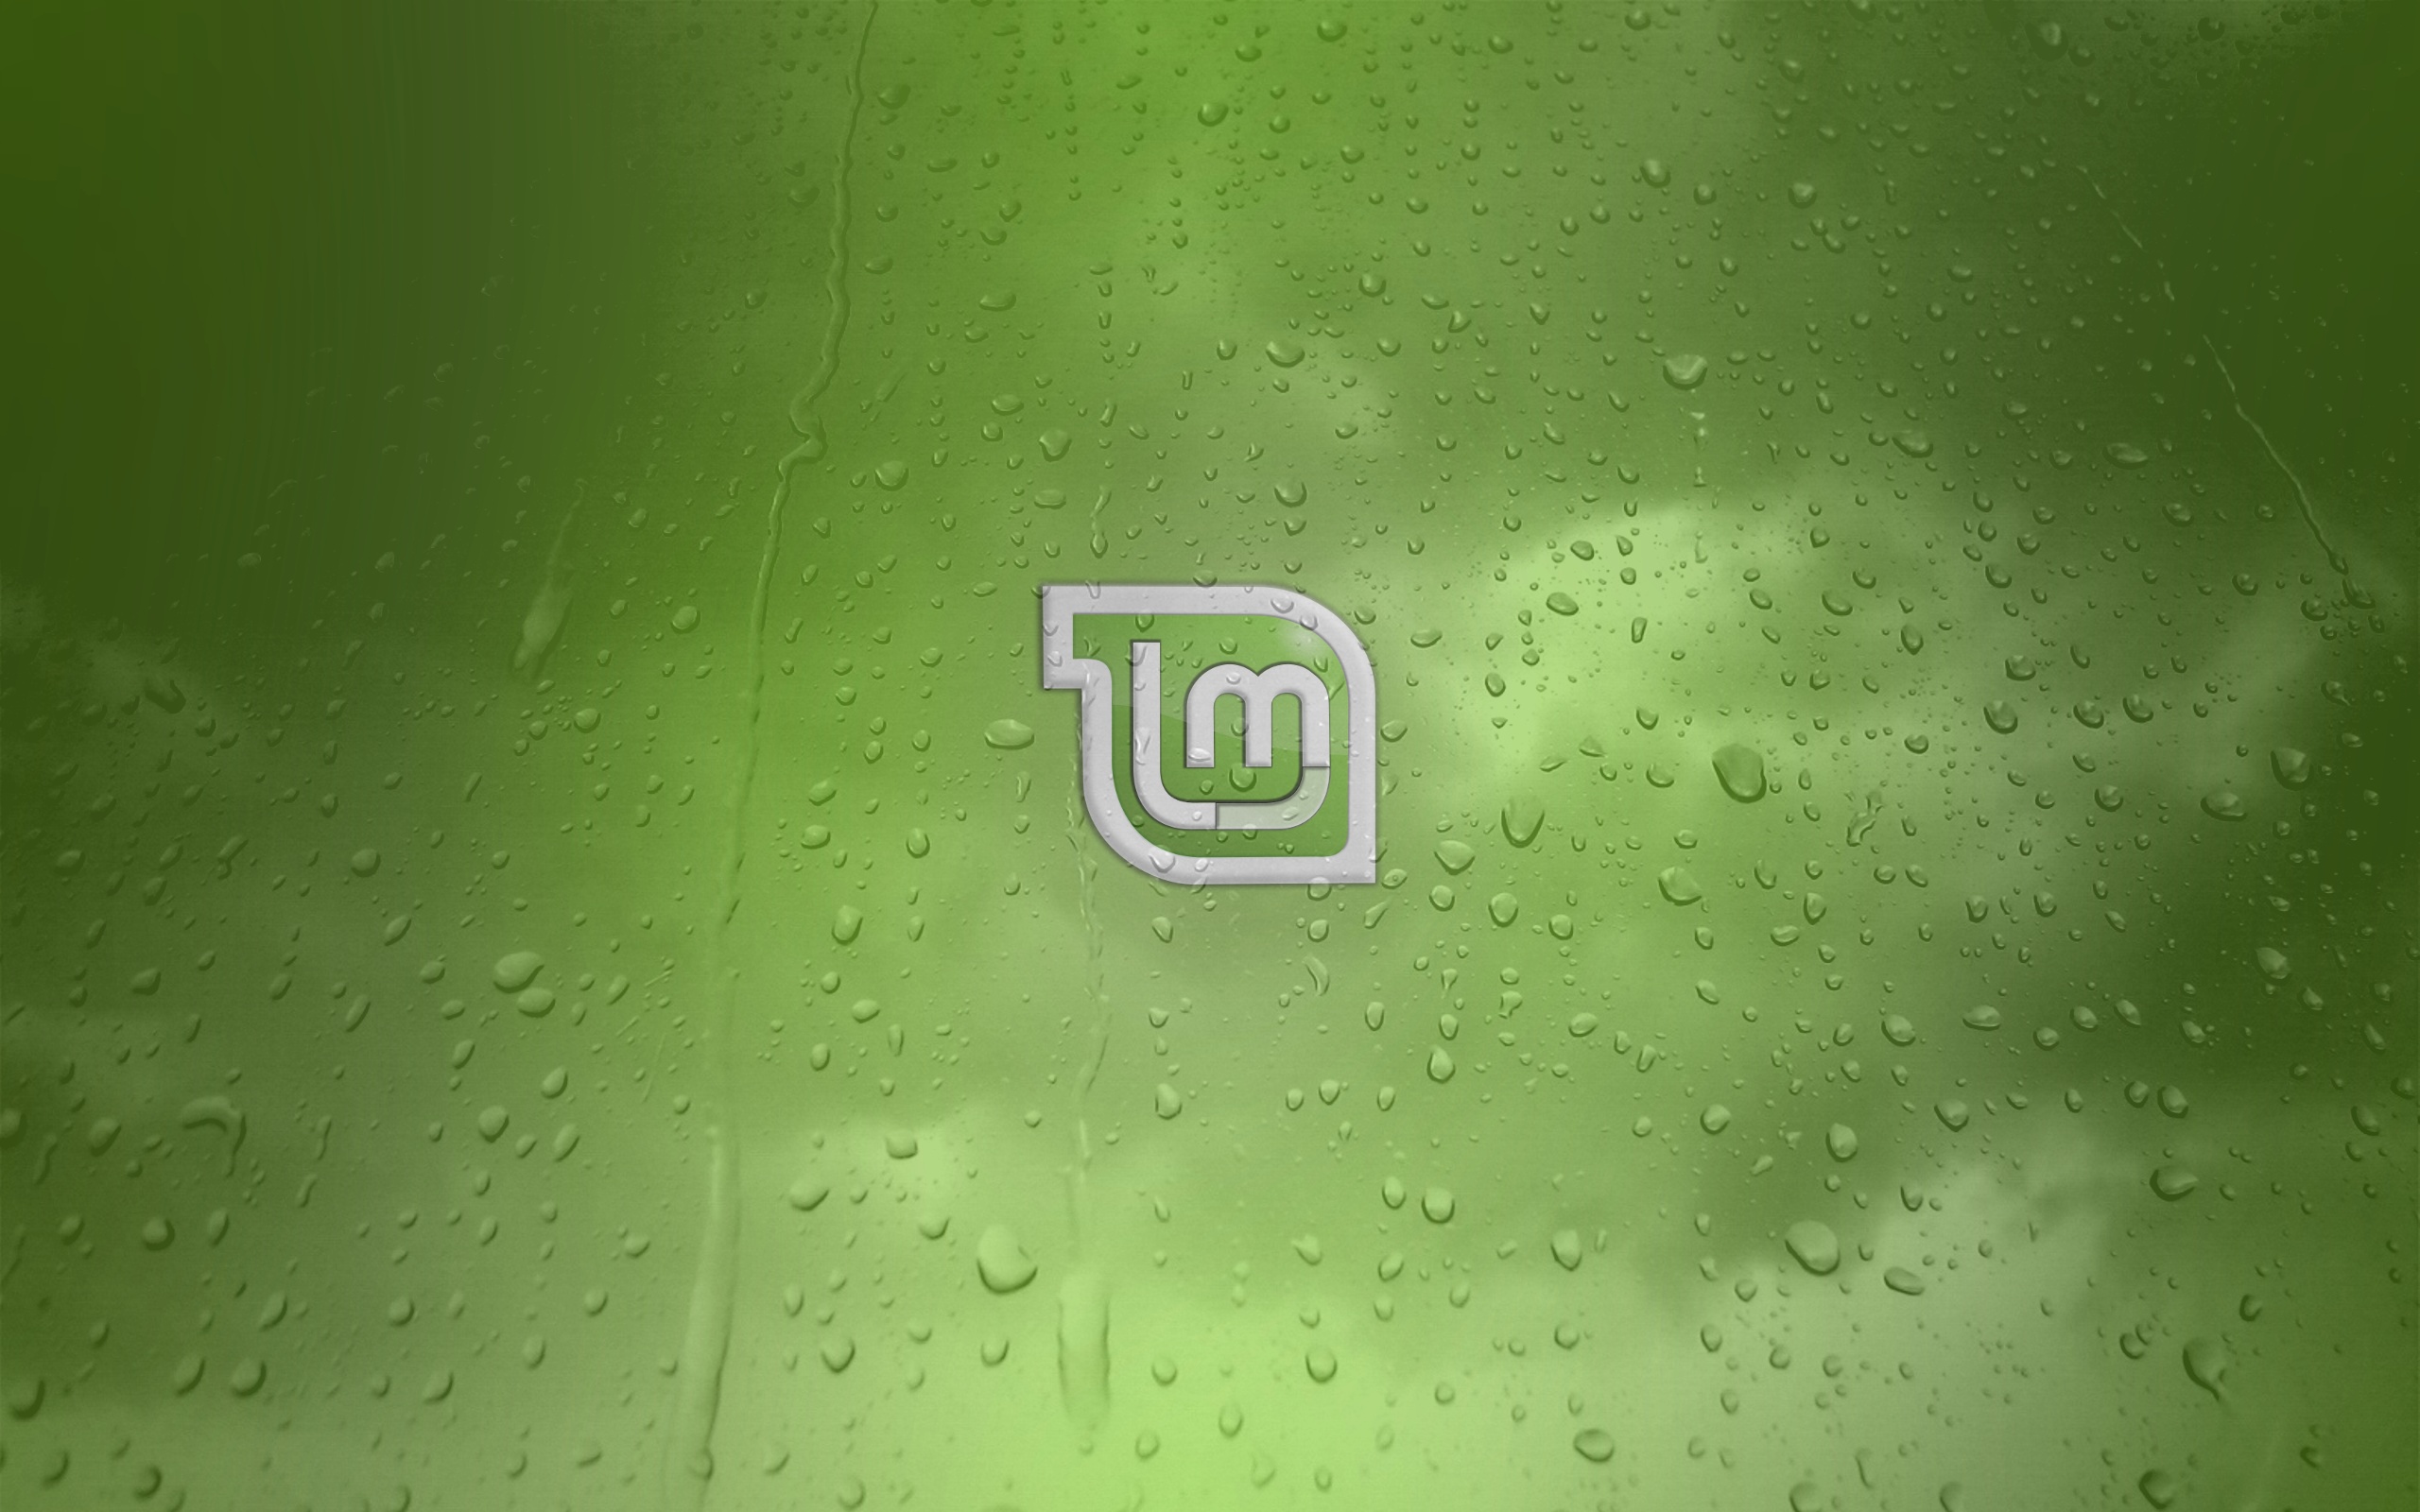 wallpaper linux mint,green,text,font,logo,macro photography